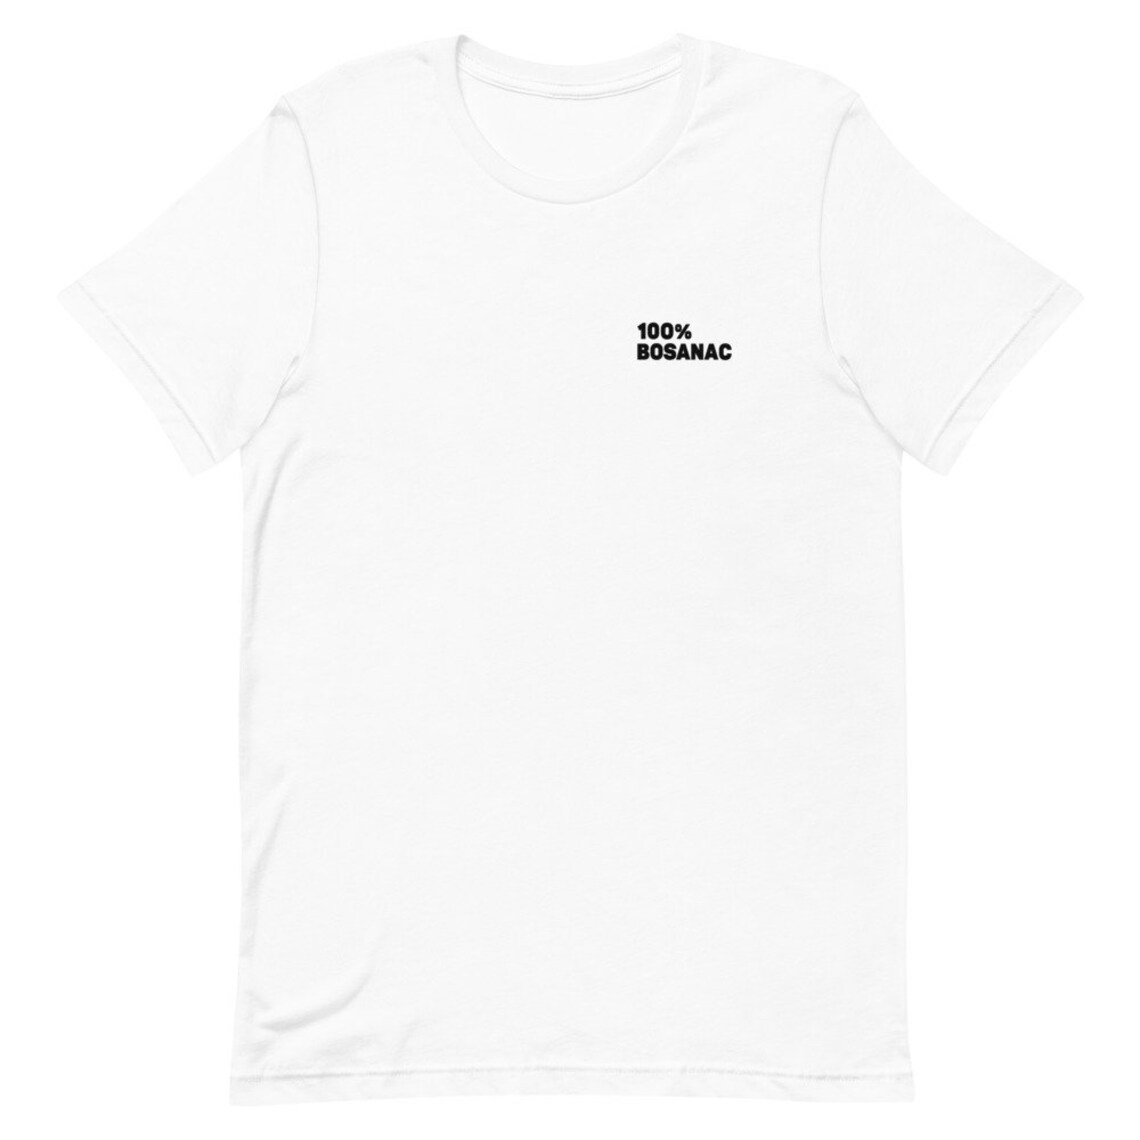 100% Bosanac. Unisex T-Shirt Balkan Clothing Bosnian | Etsy